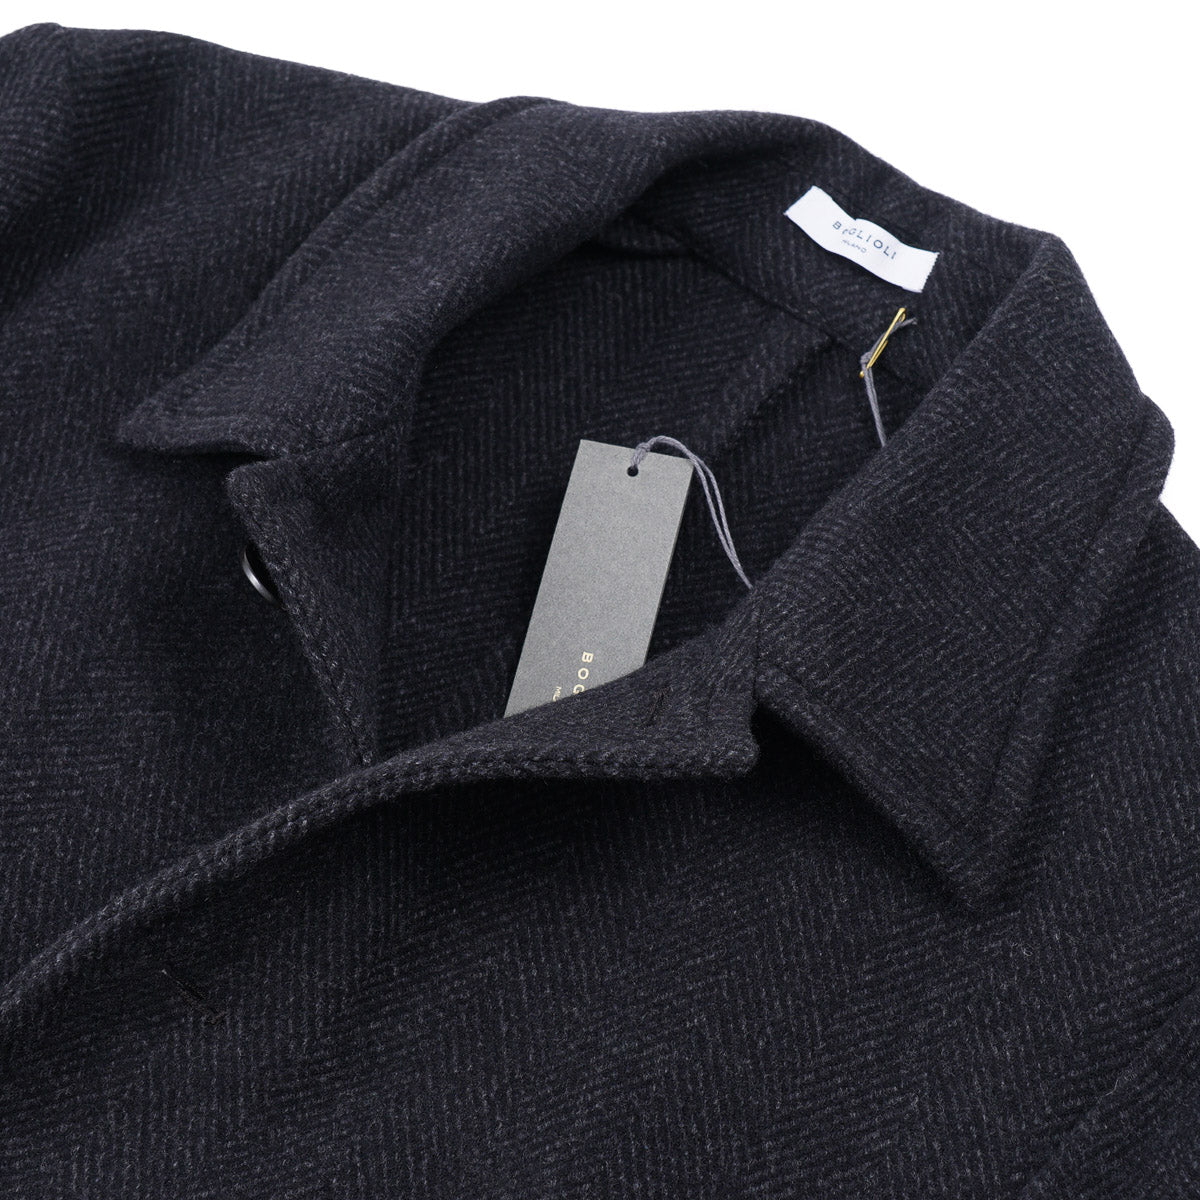 Boglioli Wool and Cashmere Overcoat - Top Shelf Apparel